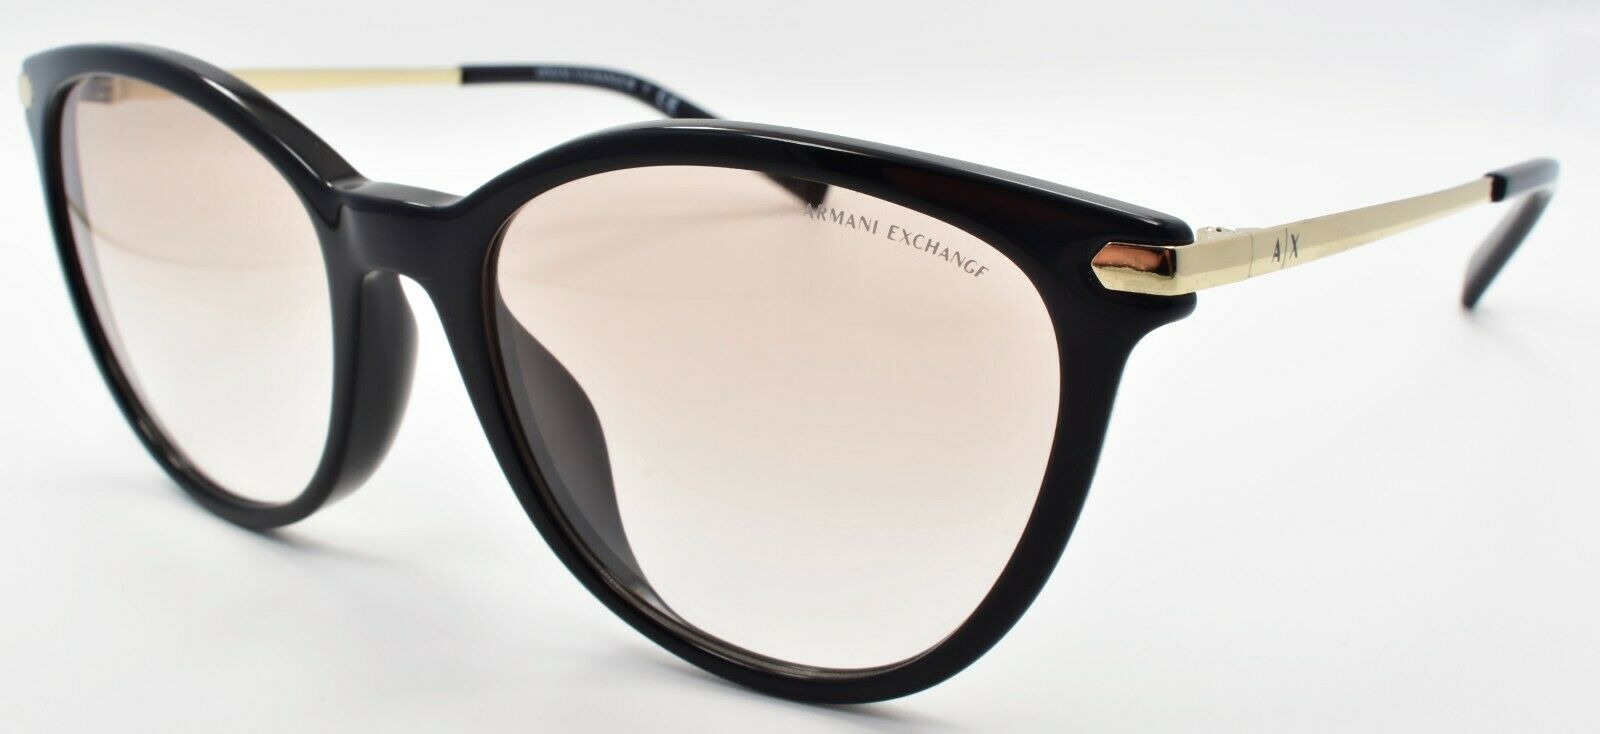 1-Armani Exchange AX4107SF 815811 Women's Sunglasses Black / Light Brown Gradient-8056597426473-IKSpecs